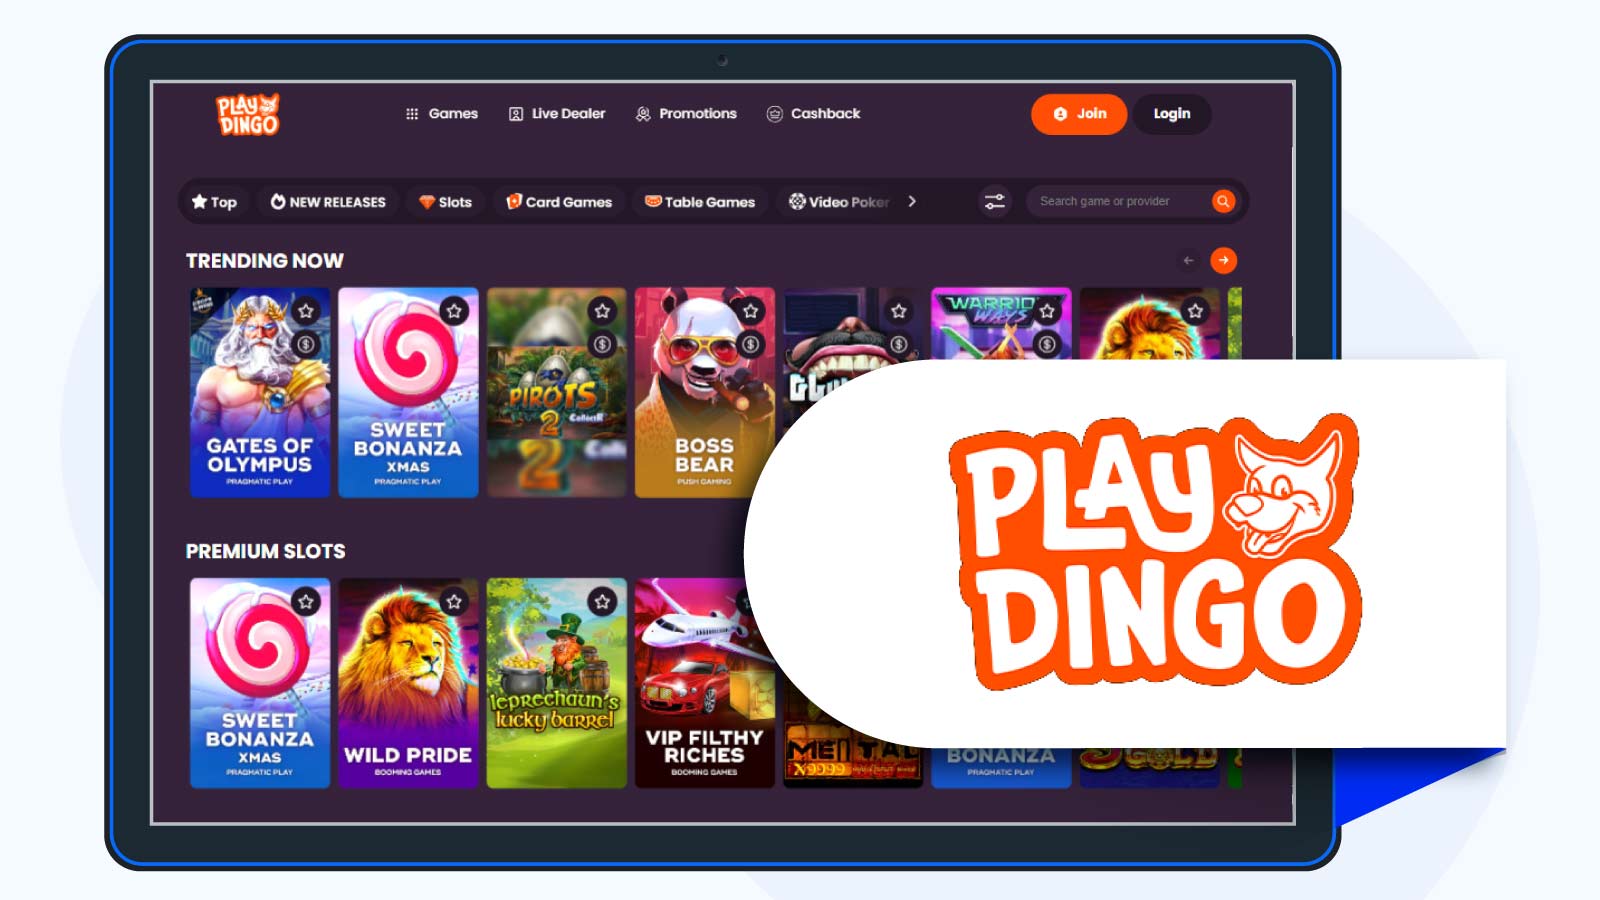 Playdingo-Casino-Free-Spins-No-Deposit-on-Registration